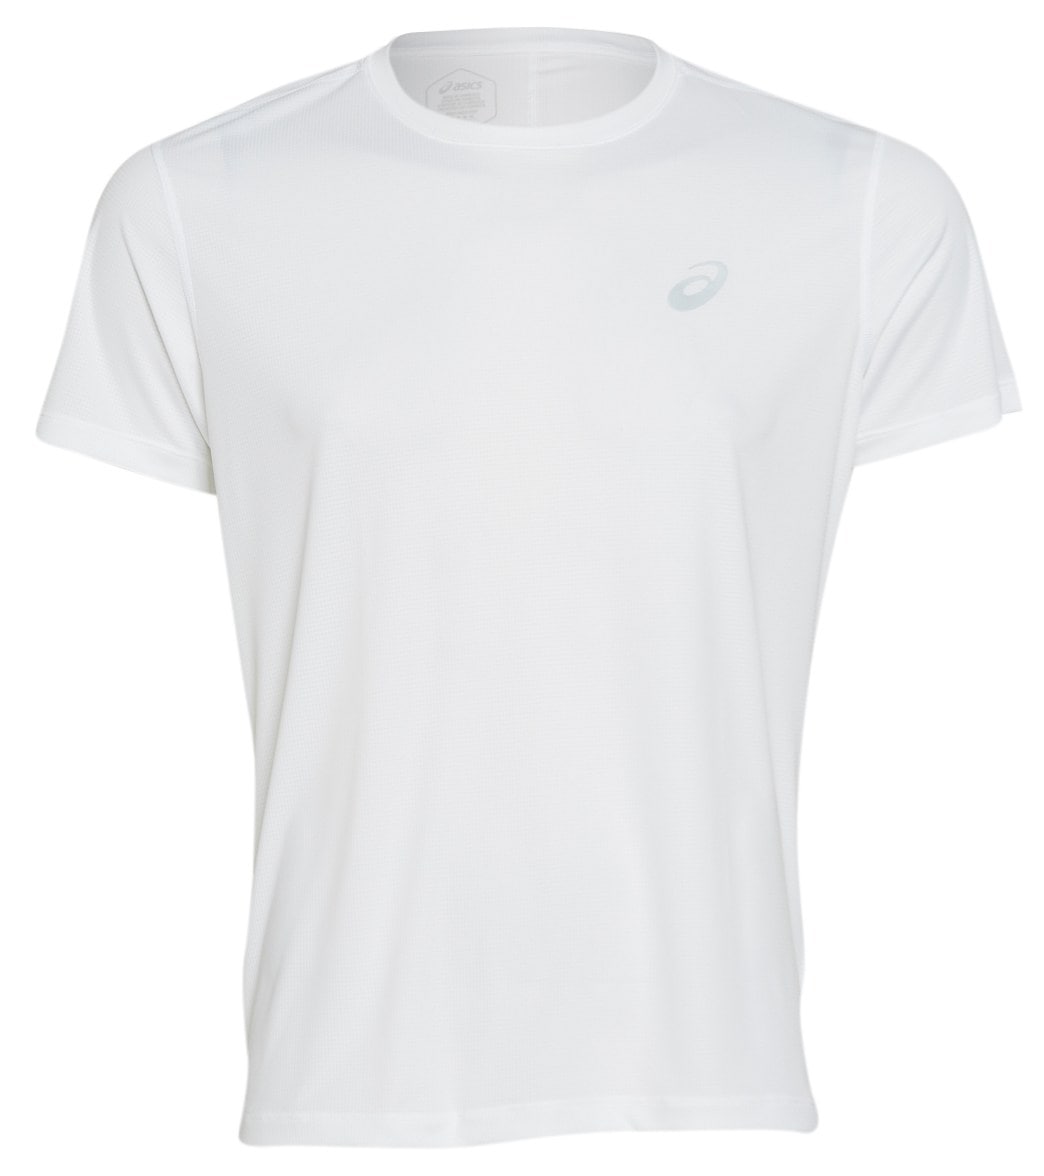 Asics Men's Silver Short Sleeve Top Shirt - Brilliant White Large Size Large Polyester - Swimoutlet.com